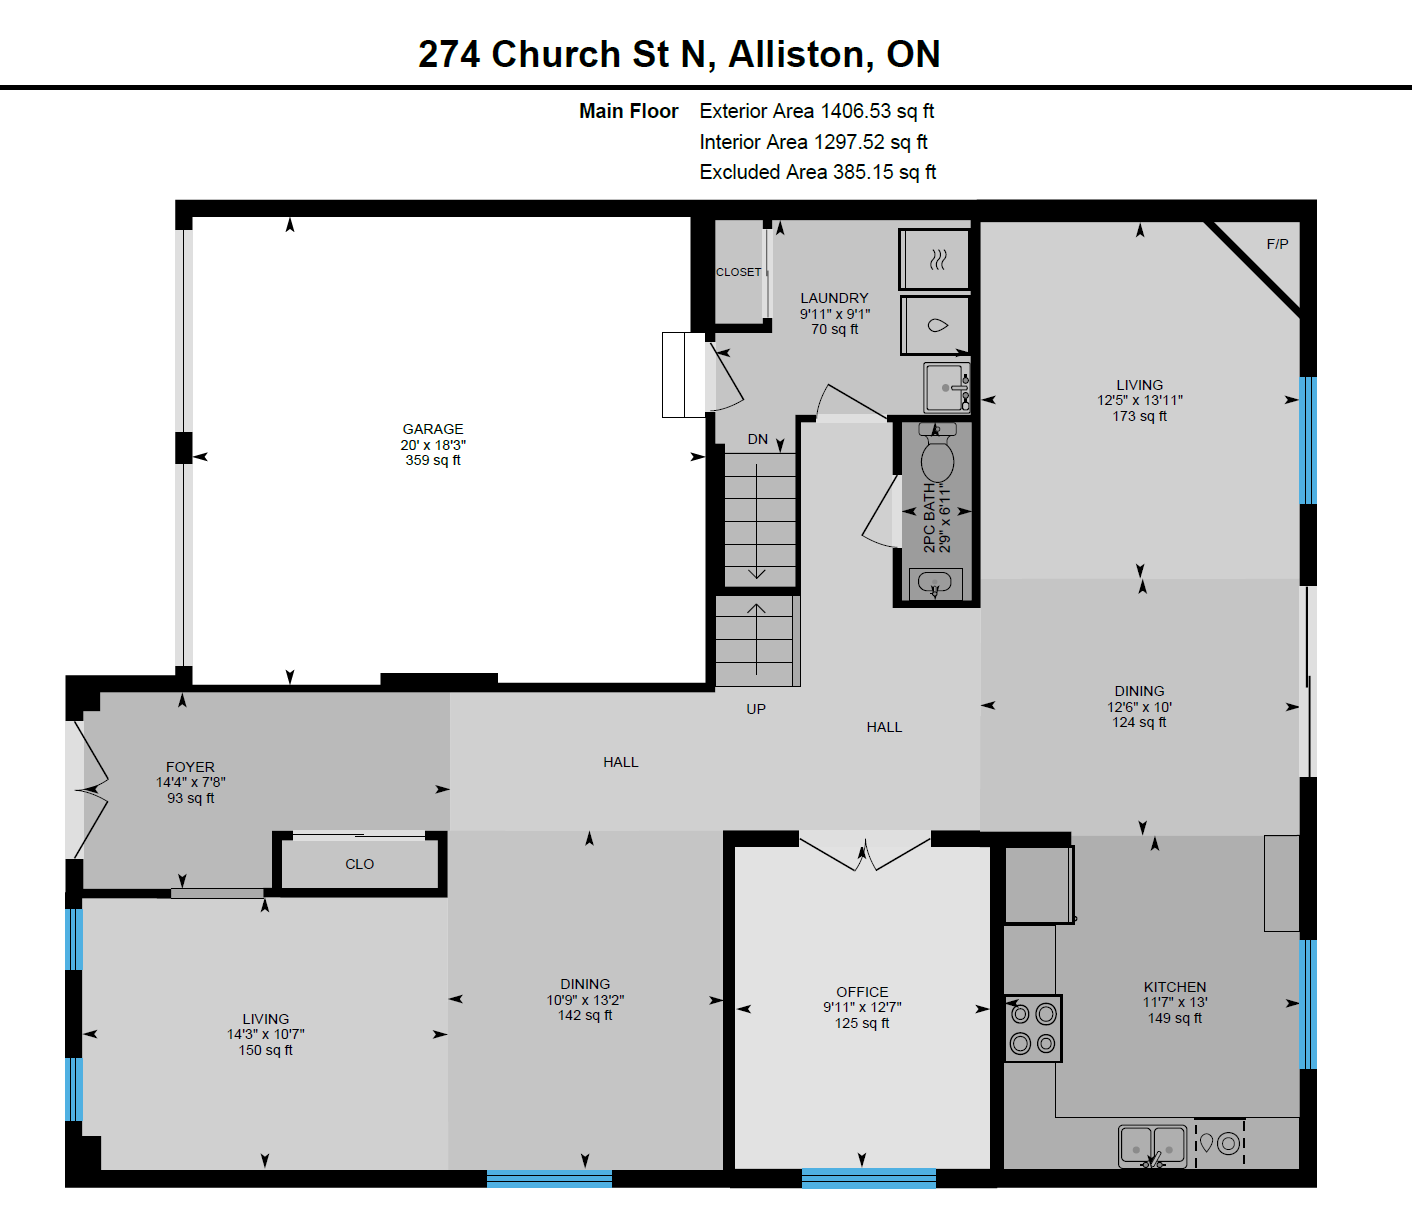 a floor plan for 274 church st n. alliston ontario